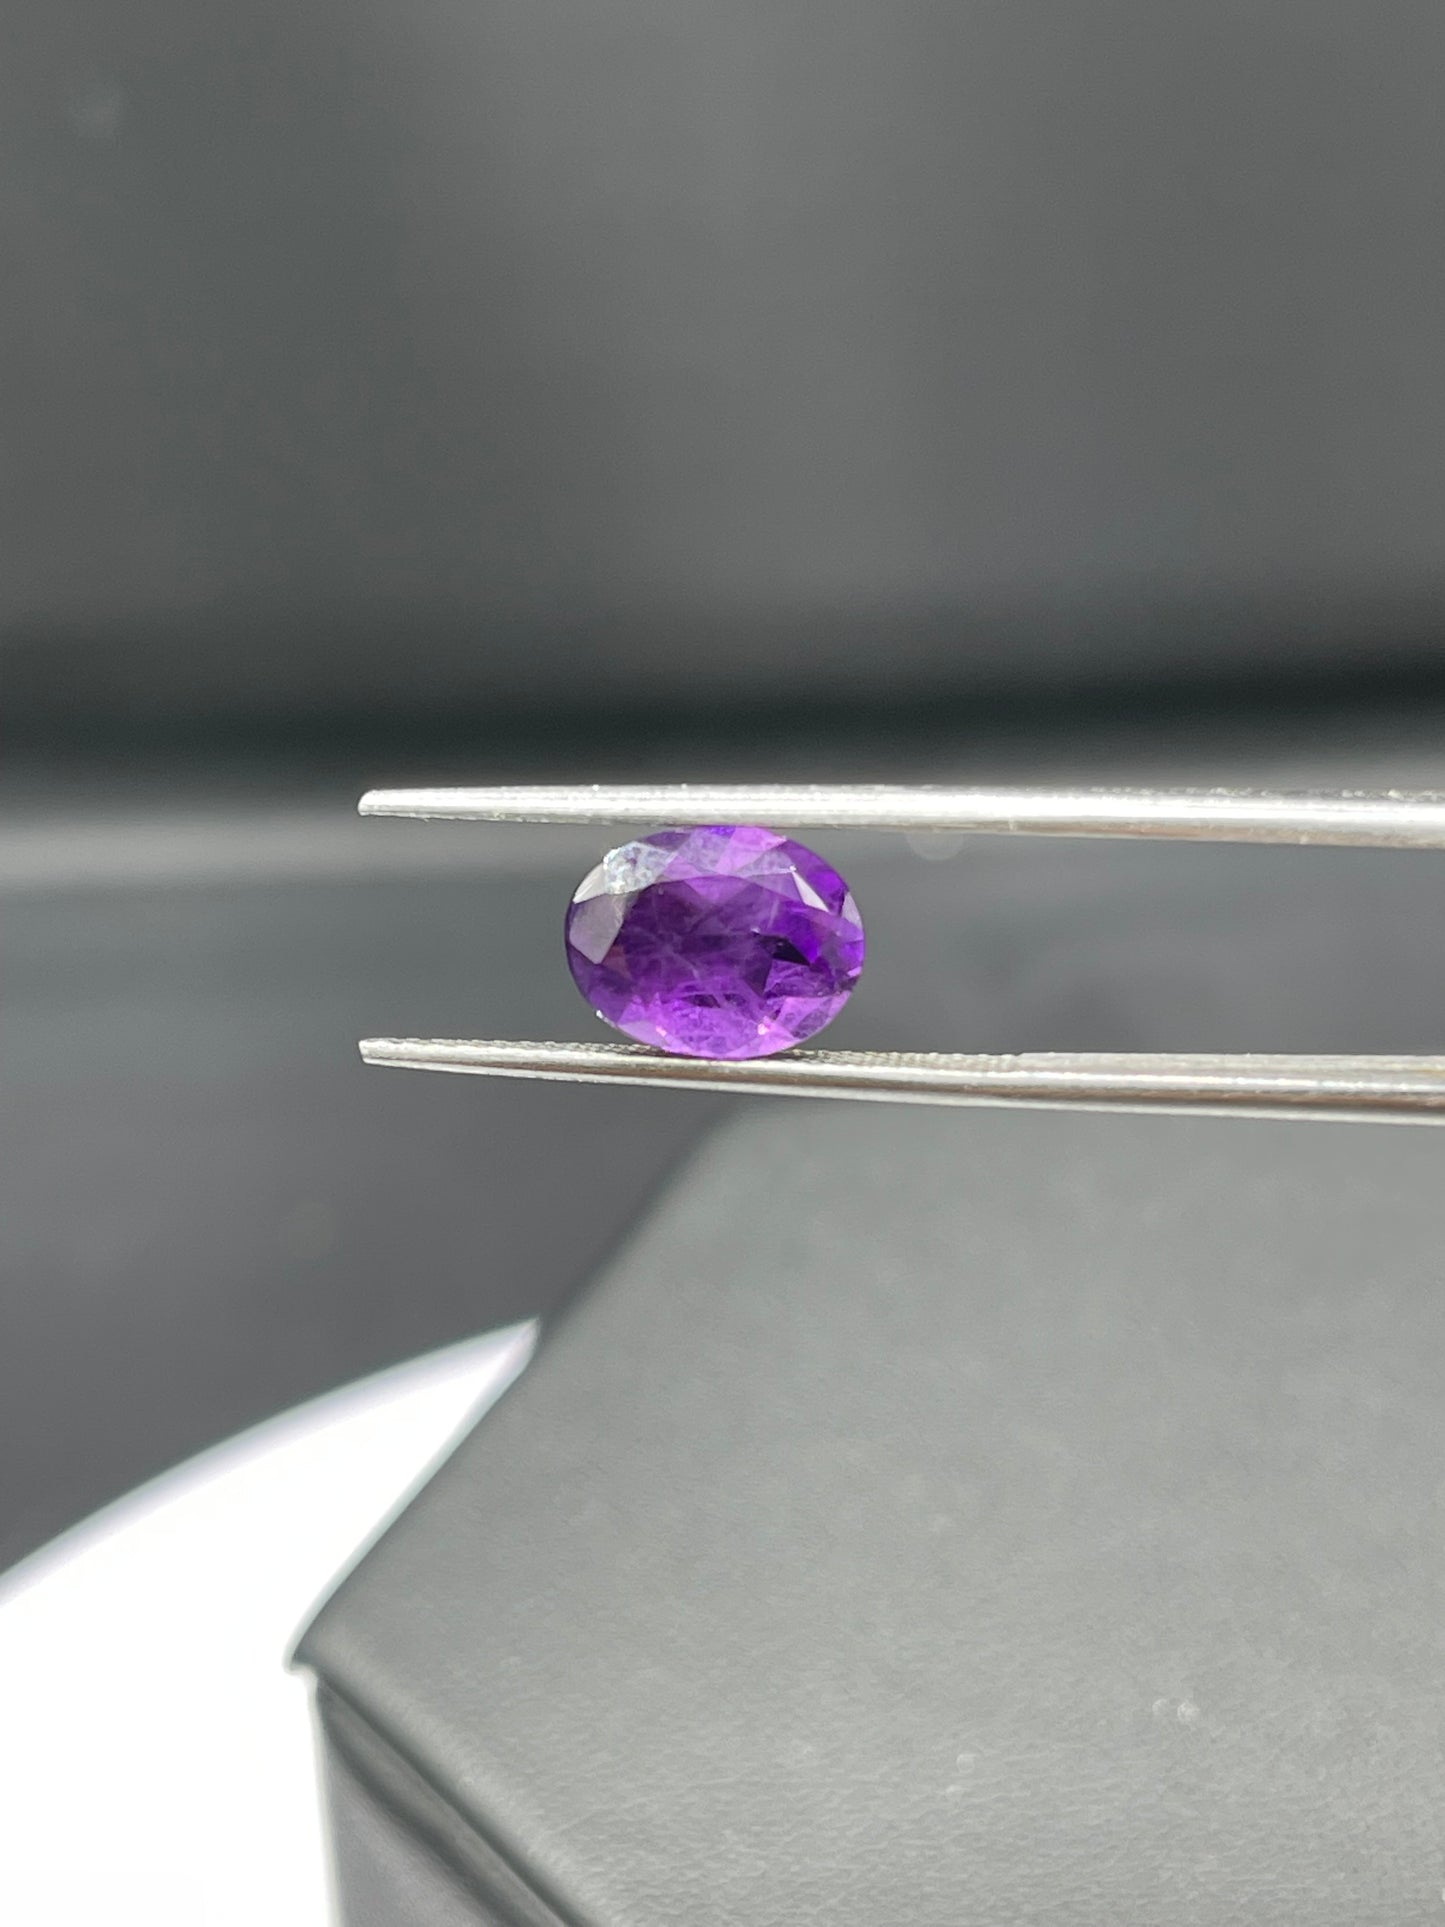 Amethyst Oval Cut Loose Gemstones Matching Pair 10x8x6 MM